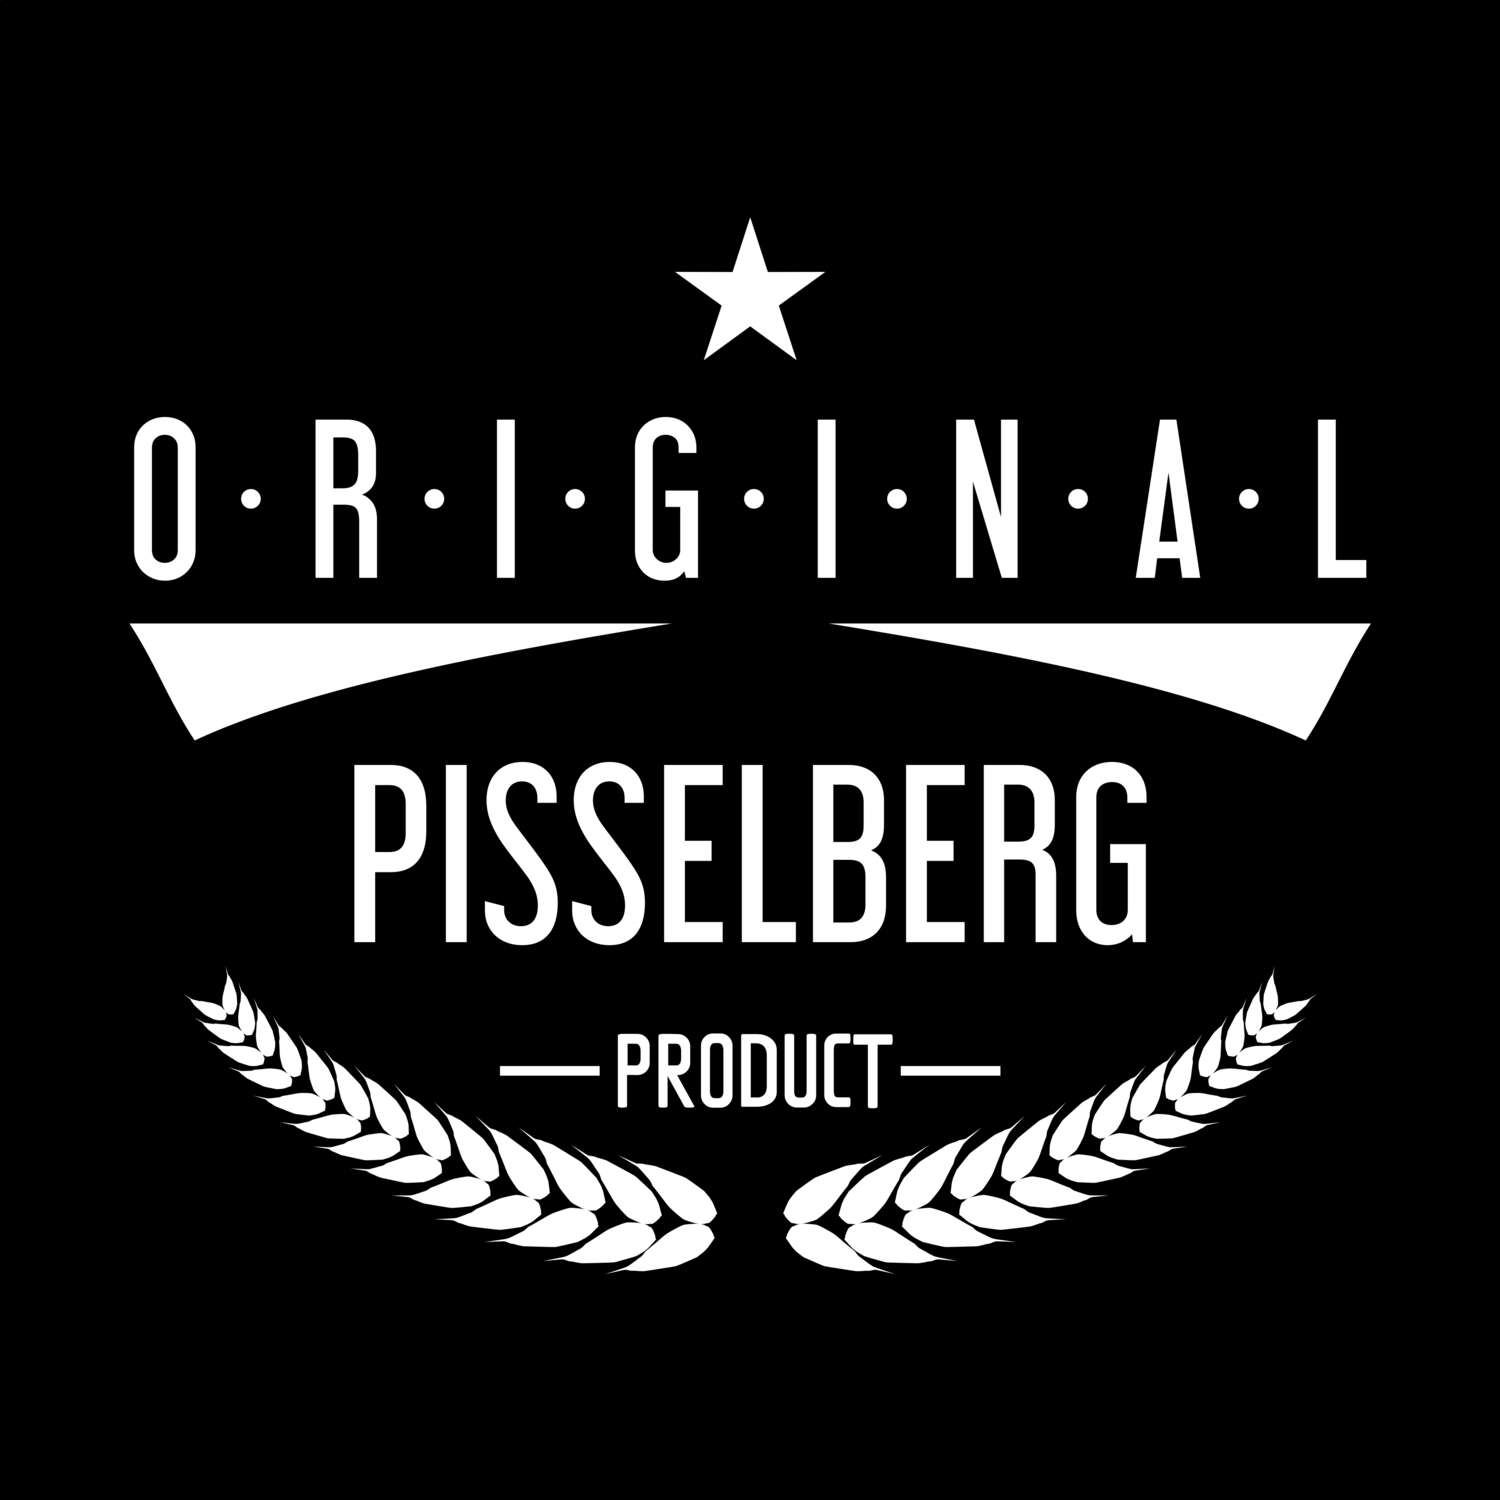 Pisselberg T-Shirt »Original Product«